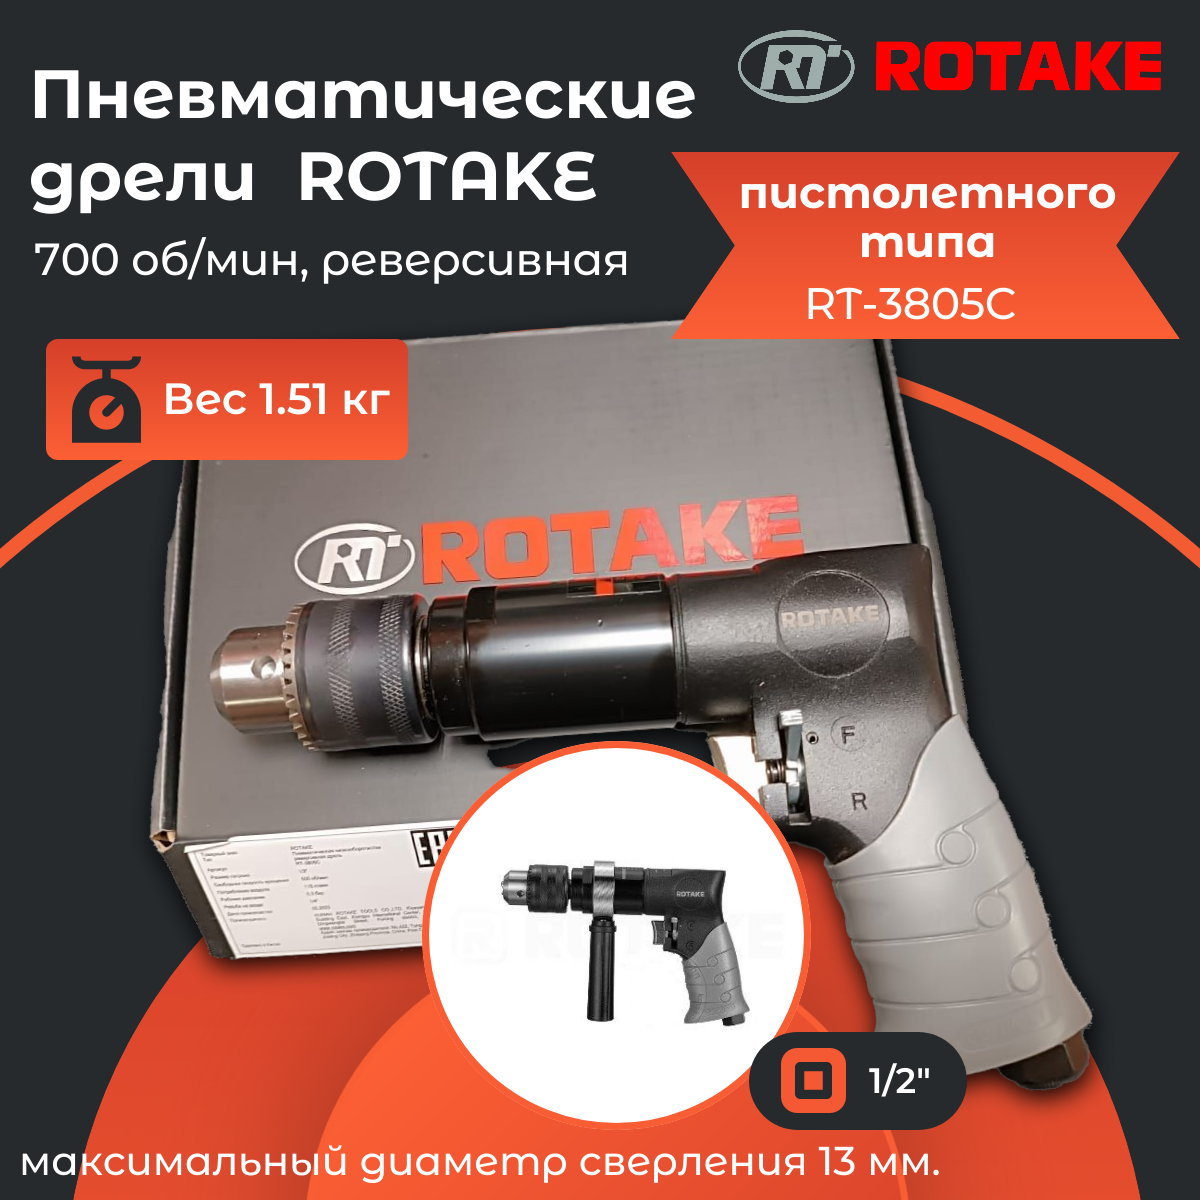 Rotake RT-3805C Пневмодрель 1/2" 700 об/мин реверсивная 1.51 кг